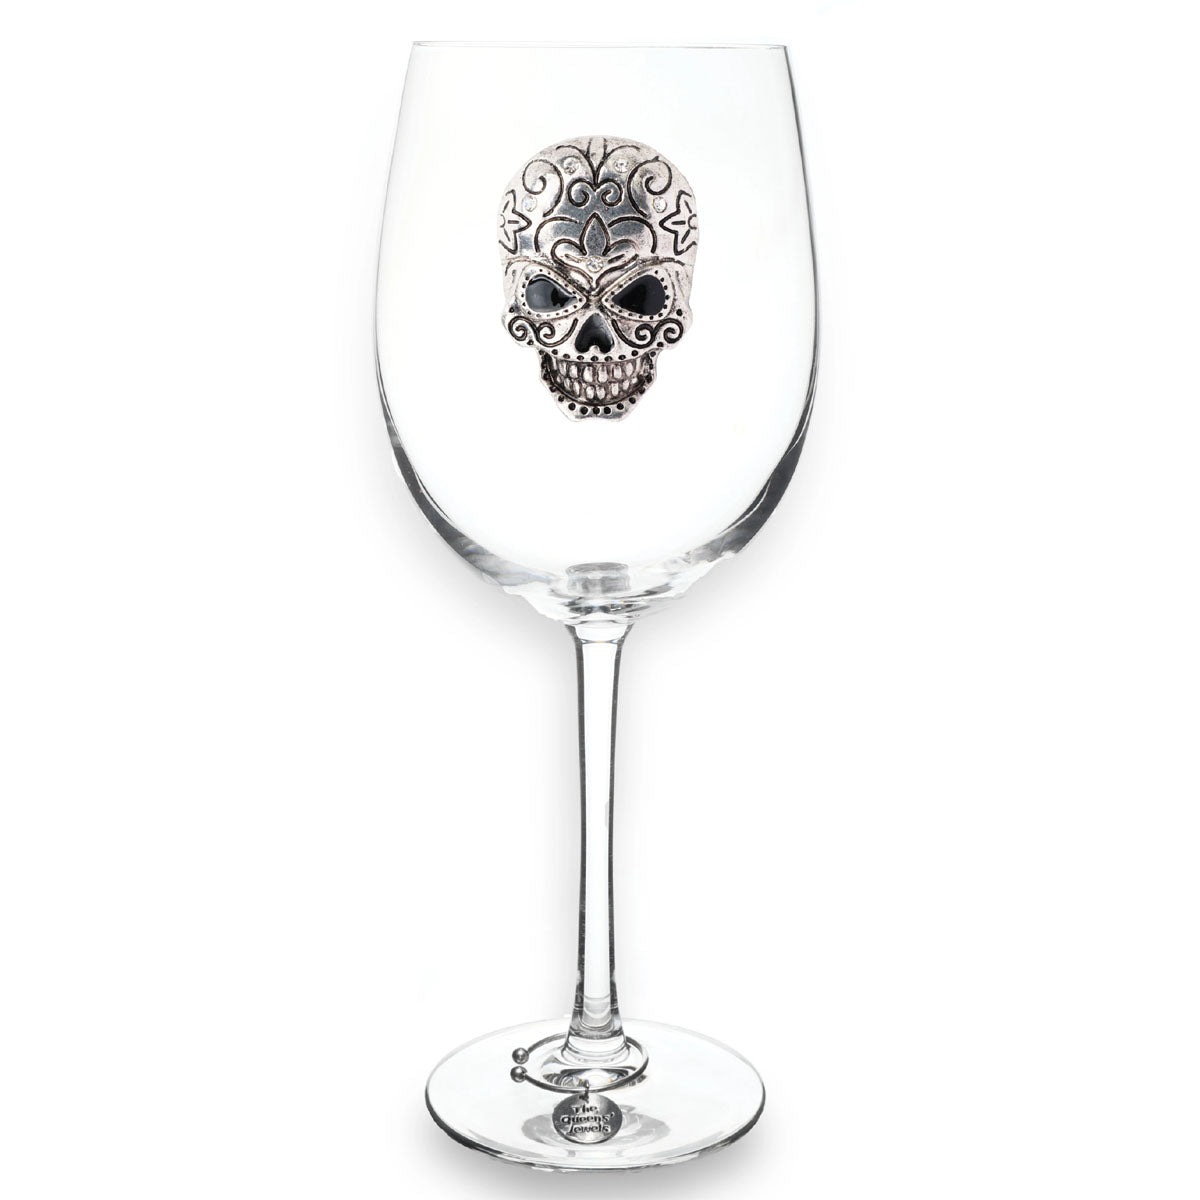 Skull Jeweled Stemmed Wine Glass(with box)